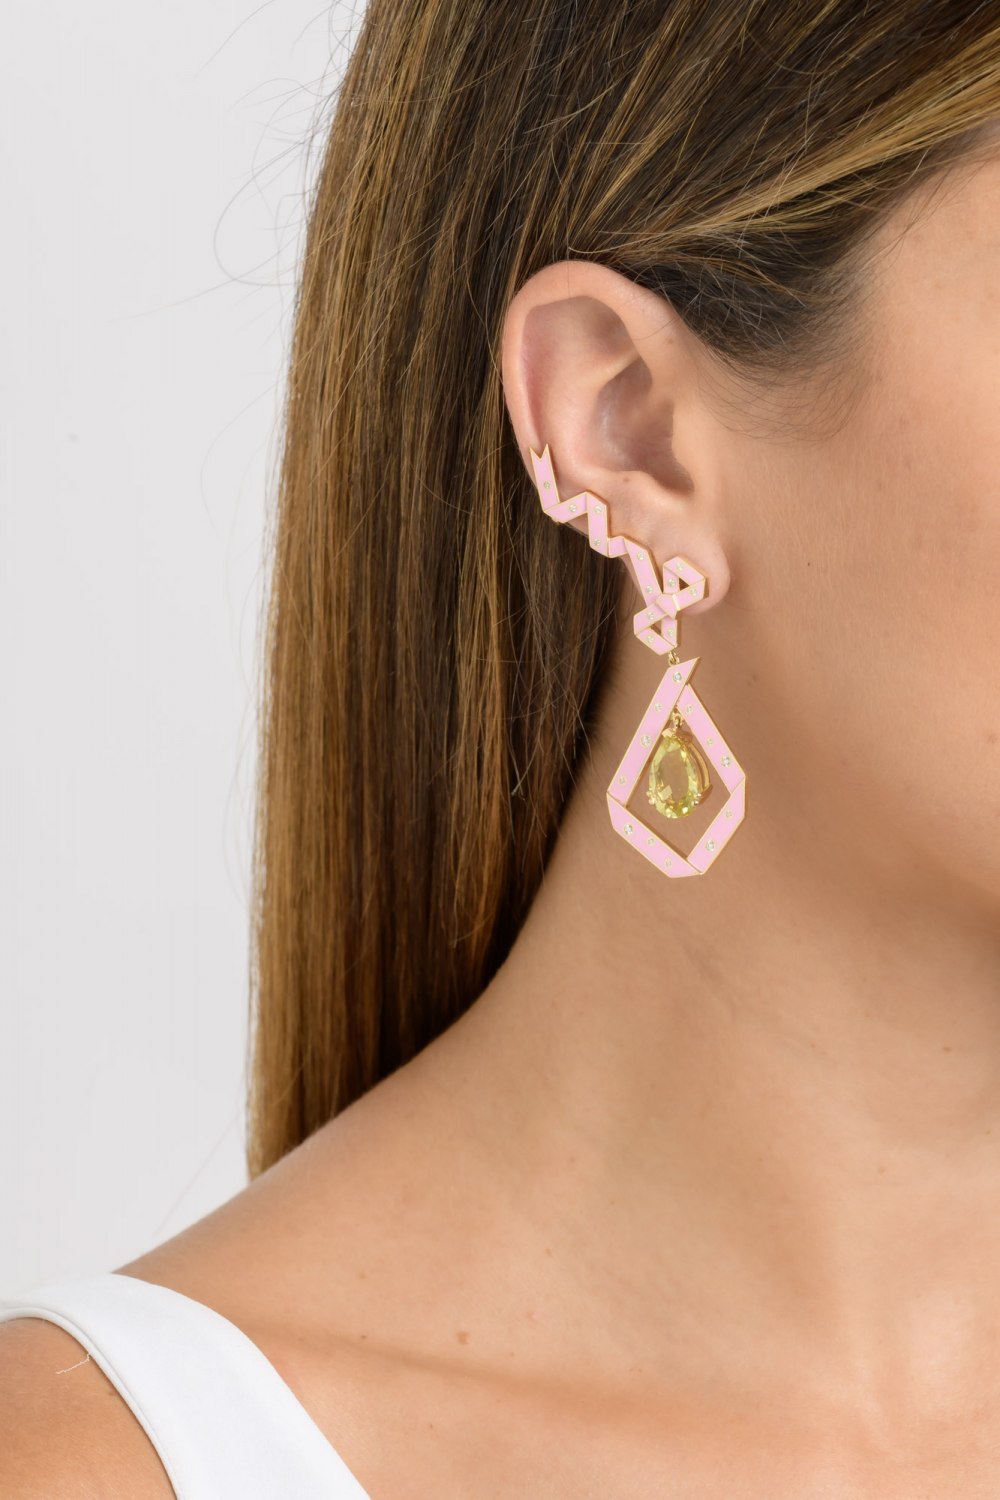 The Cadeau Pink Earrings